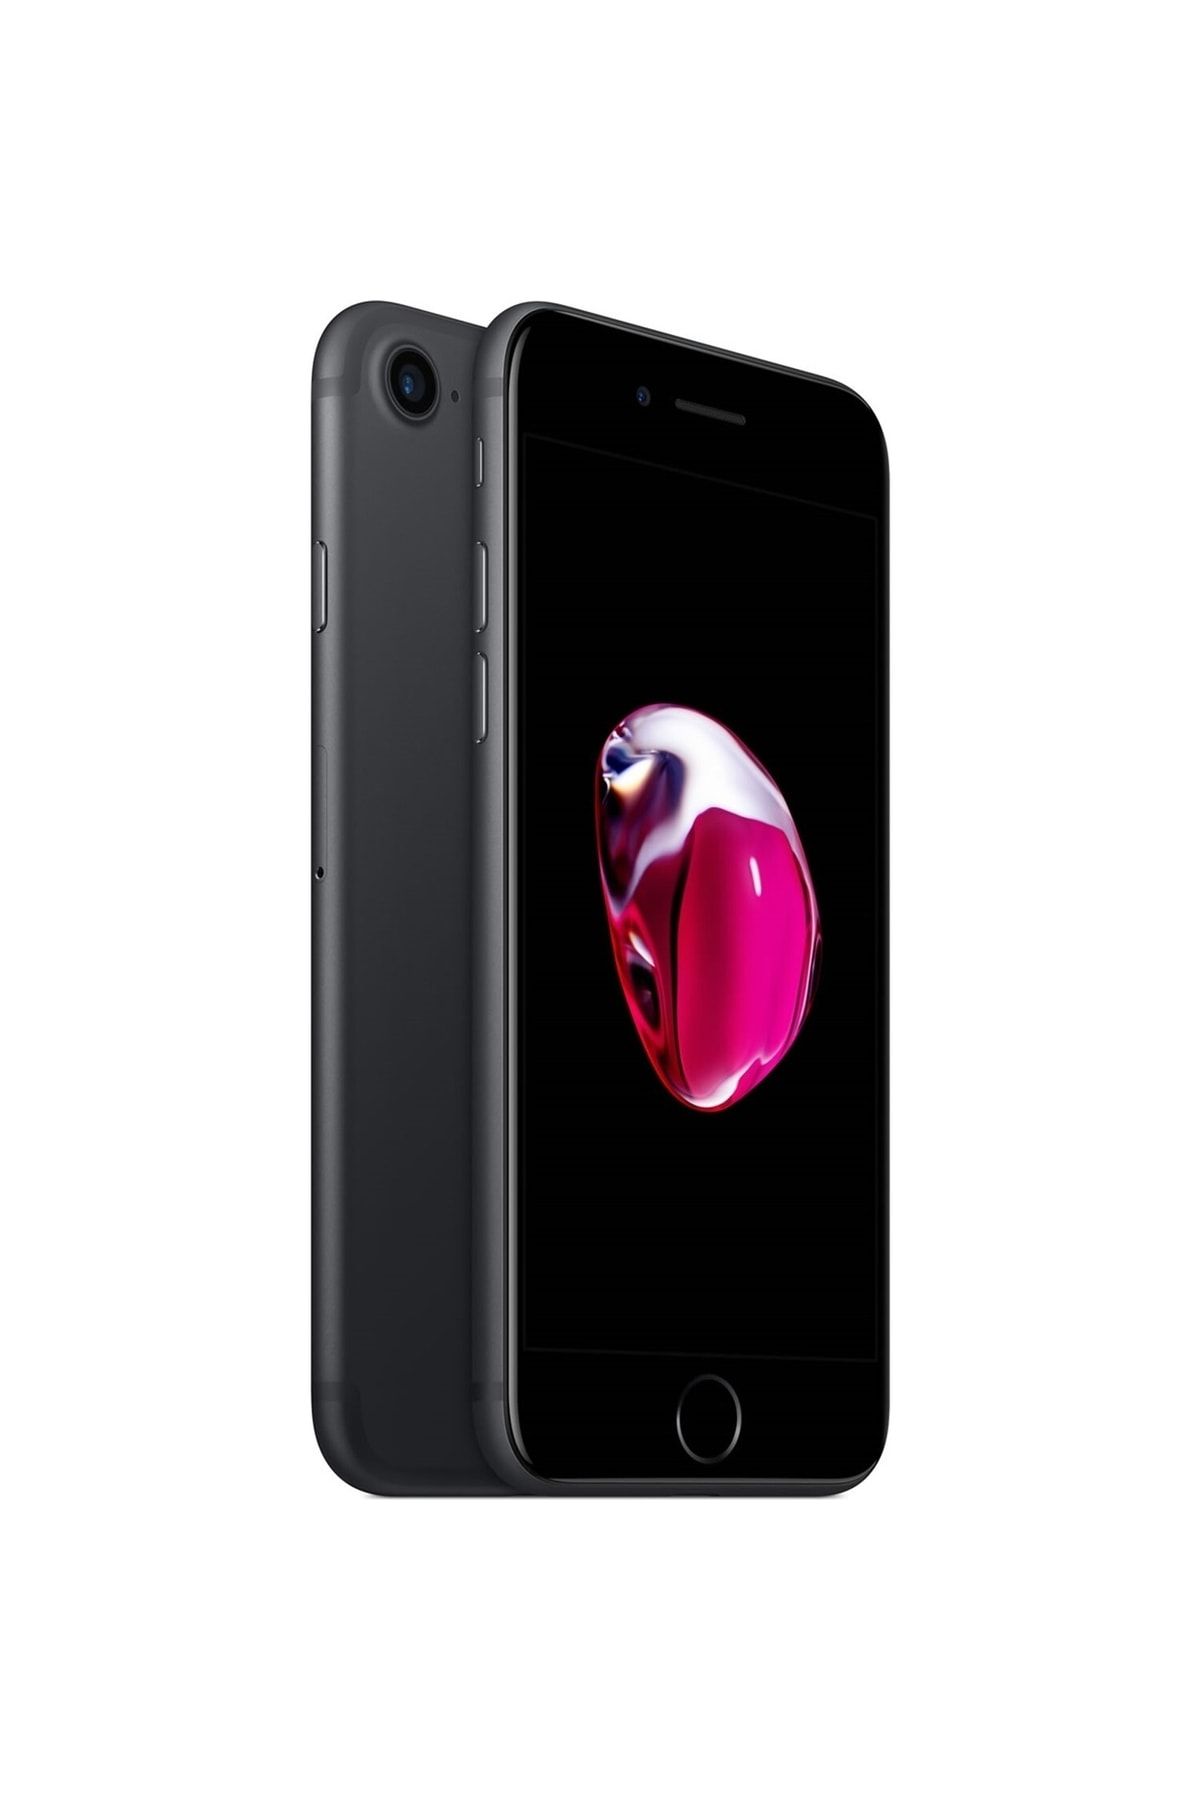 Apple Yenilenmiş iPhone 7 32 GB Black Cep Telefonu (12 Ay Garantili) - B Kalite